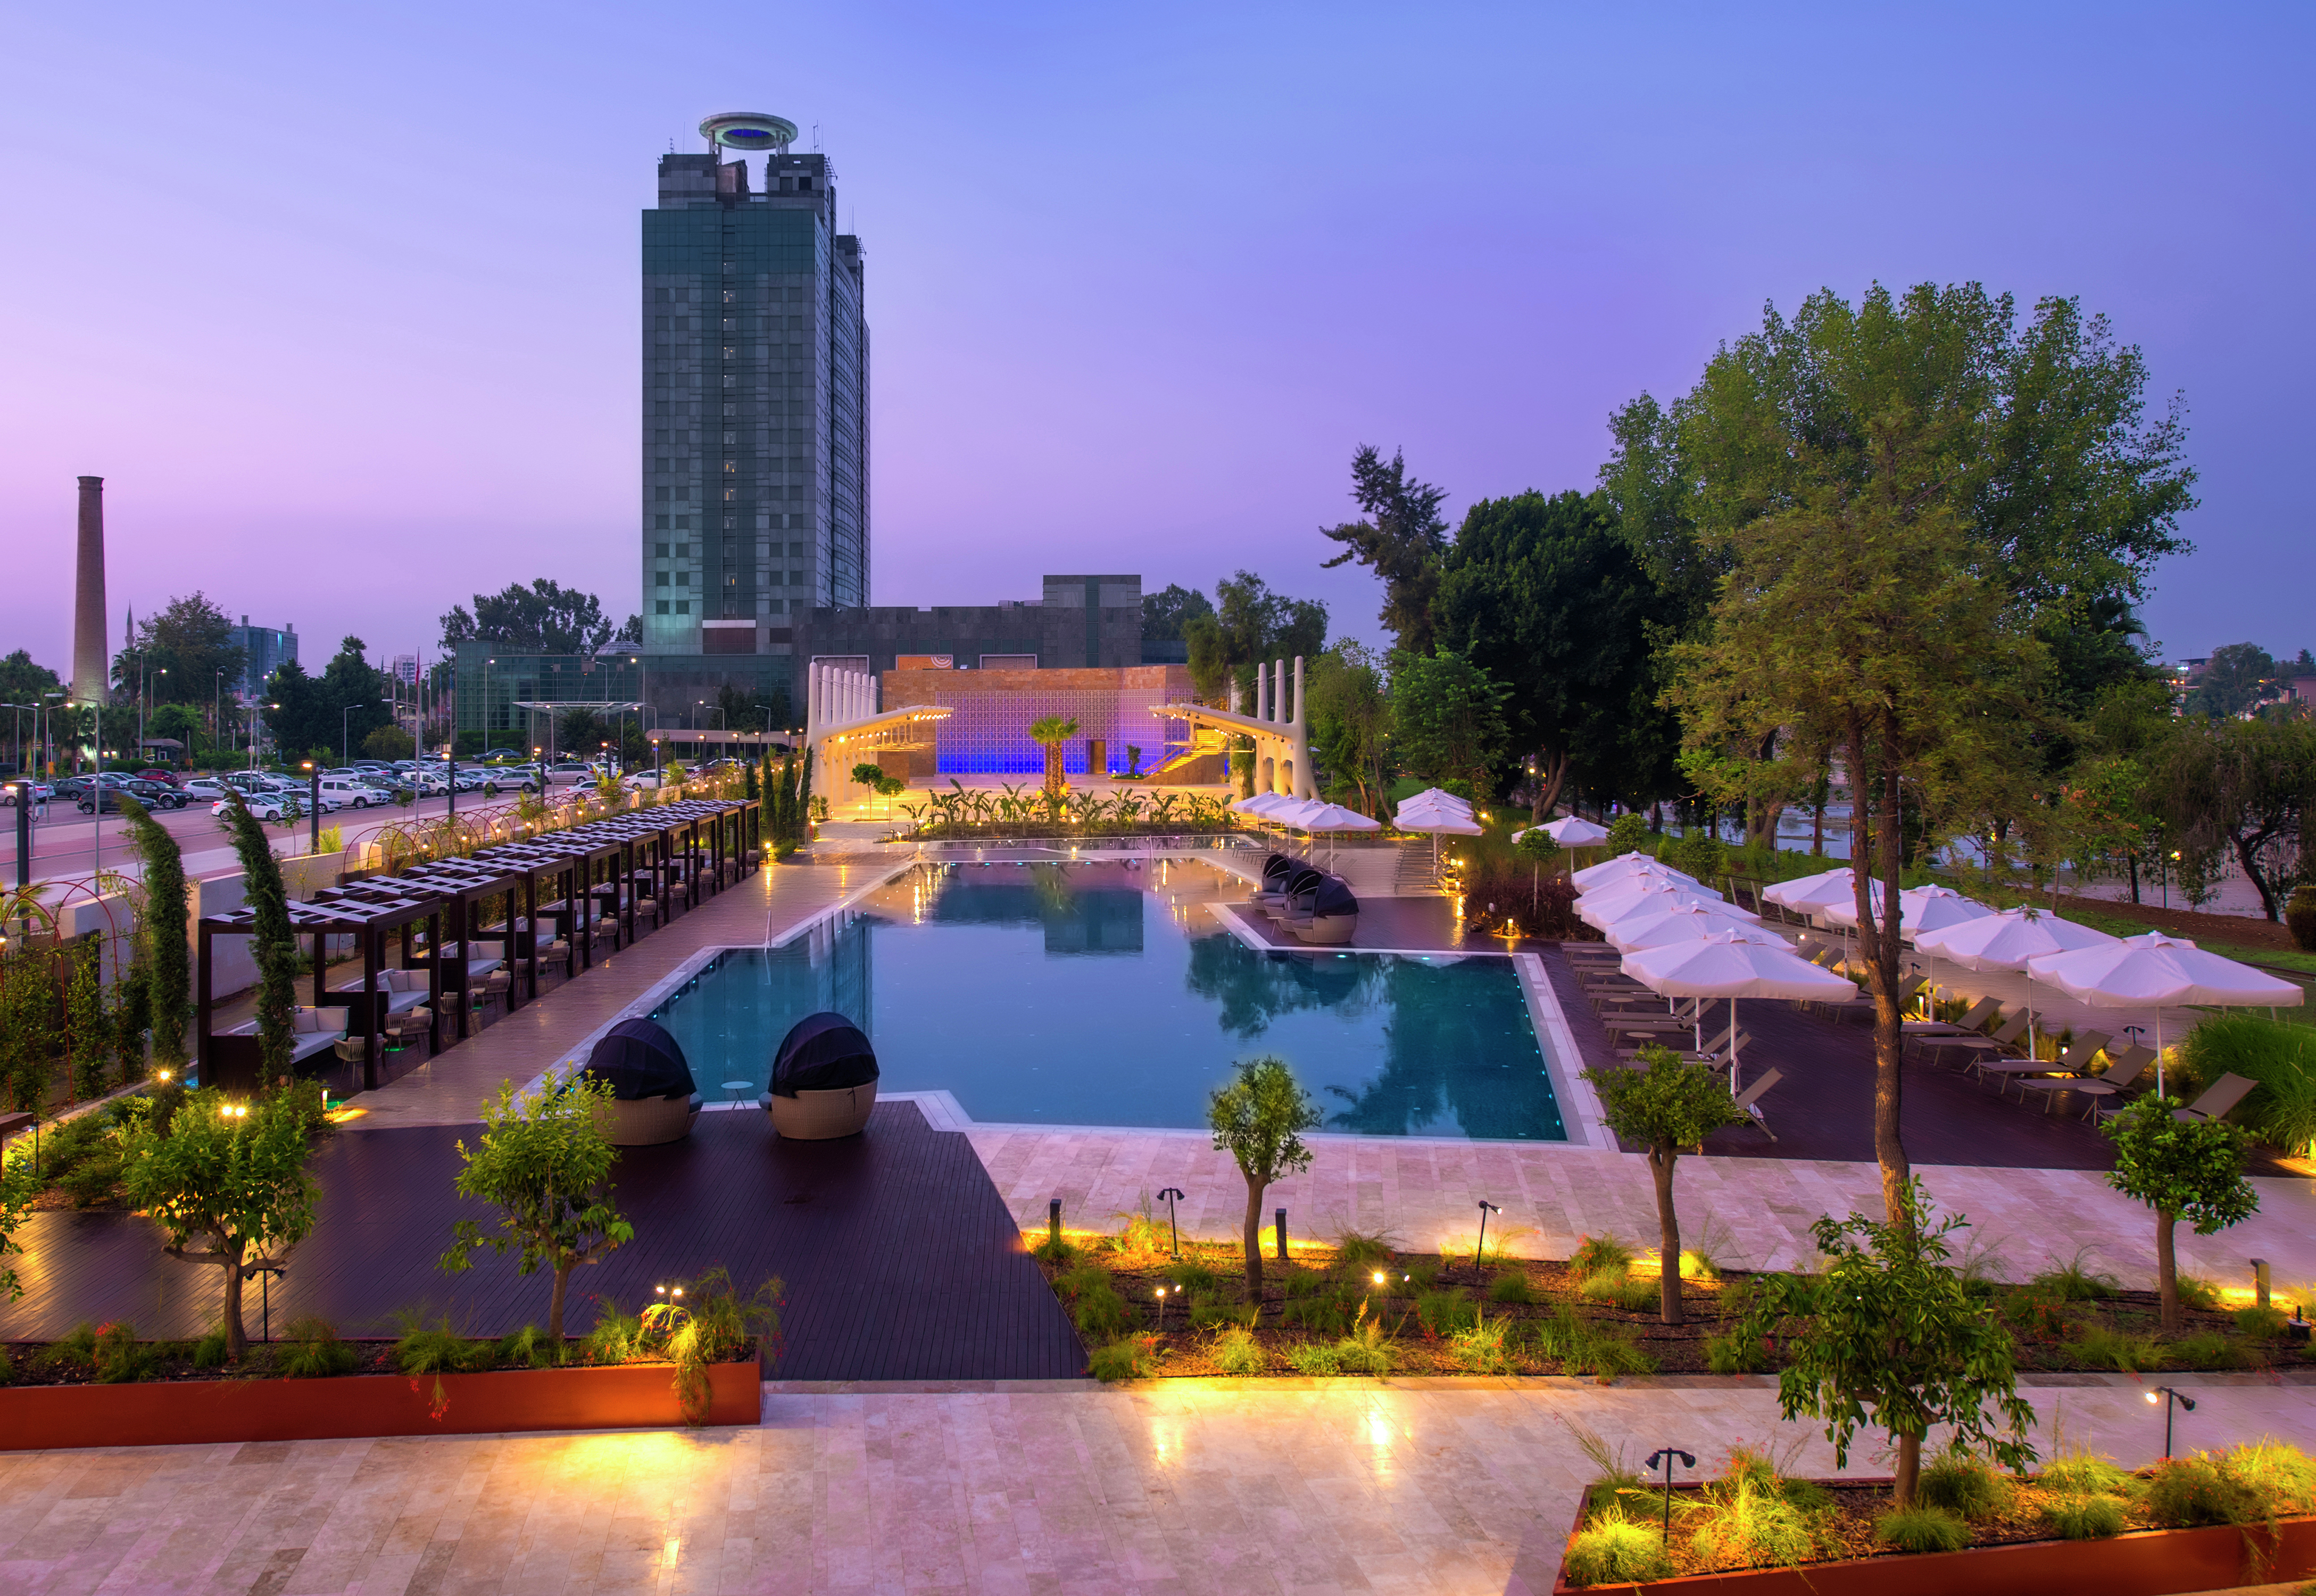 Adana HiltonSA Rivcerside Pool Bar at Night